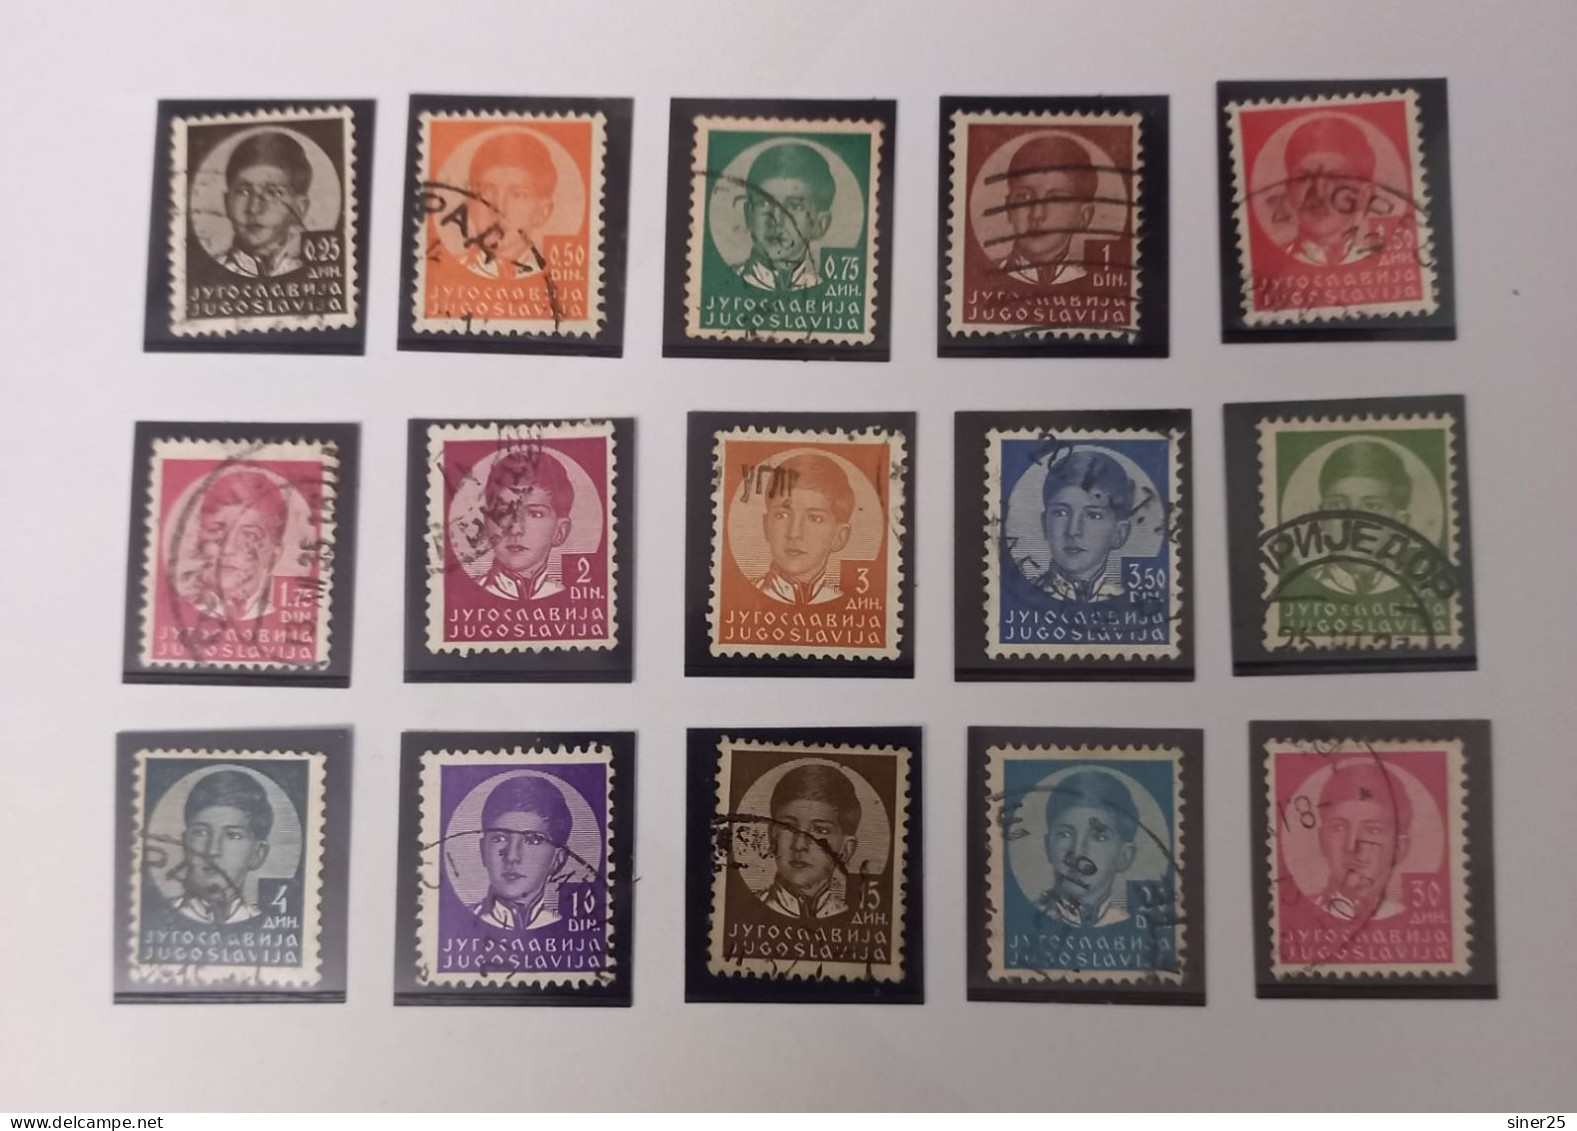 Yugoslavija (kingdom) 1935 - Used - Used Stamps